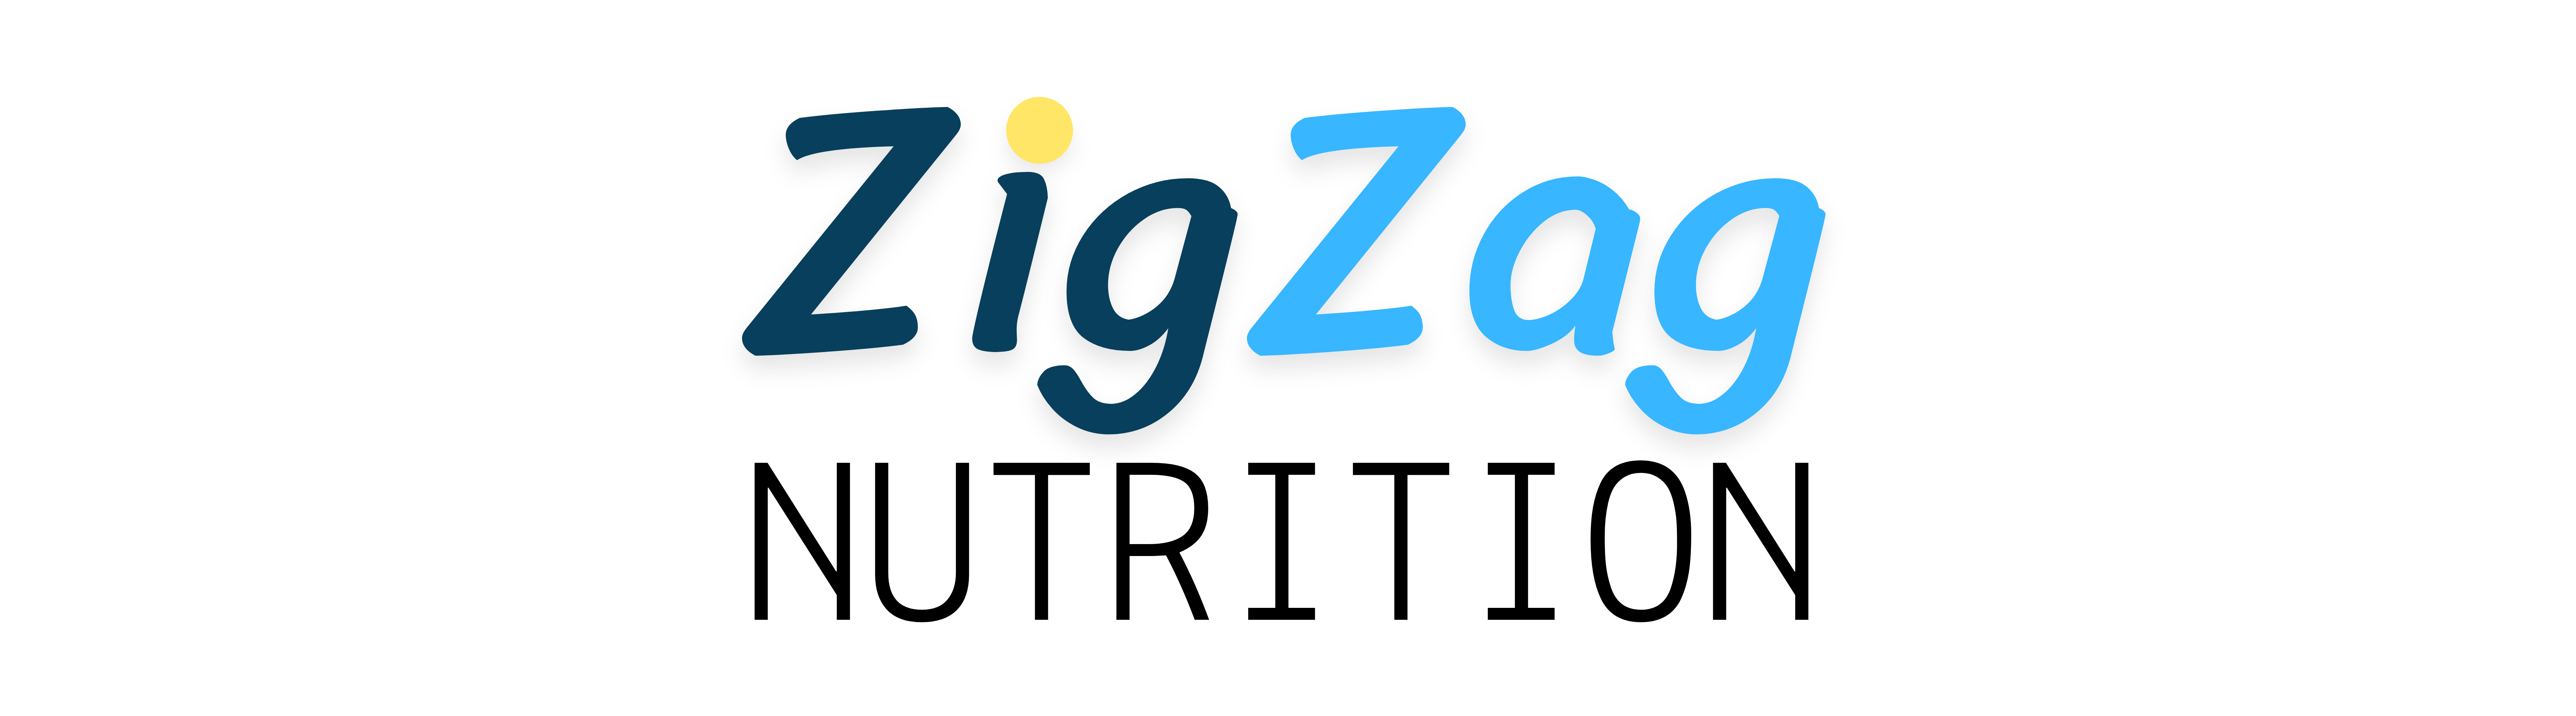 Editorial Zig-Zag